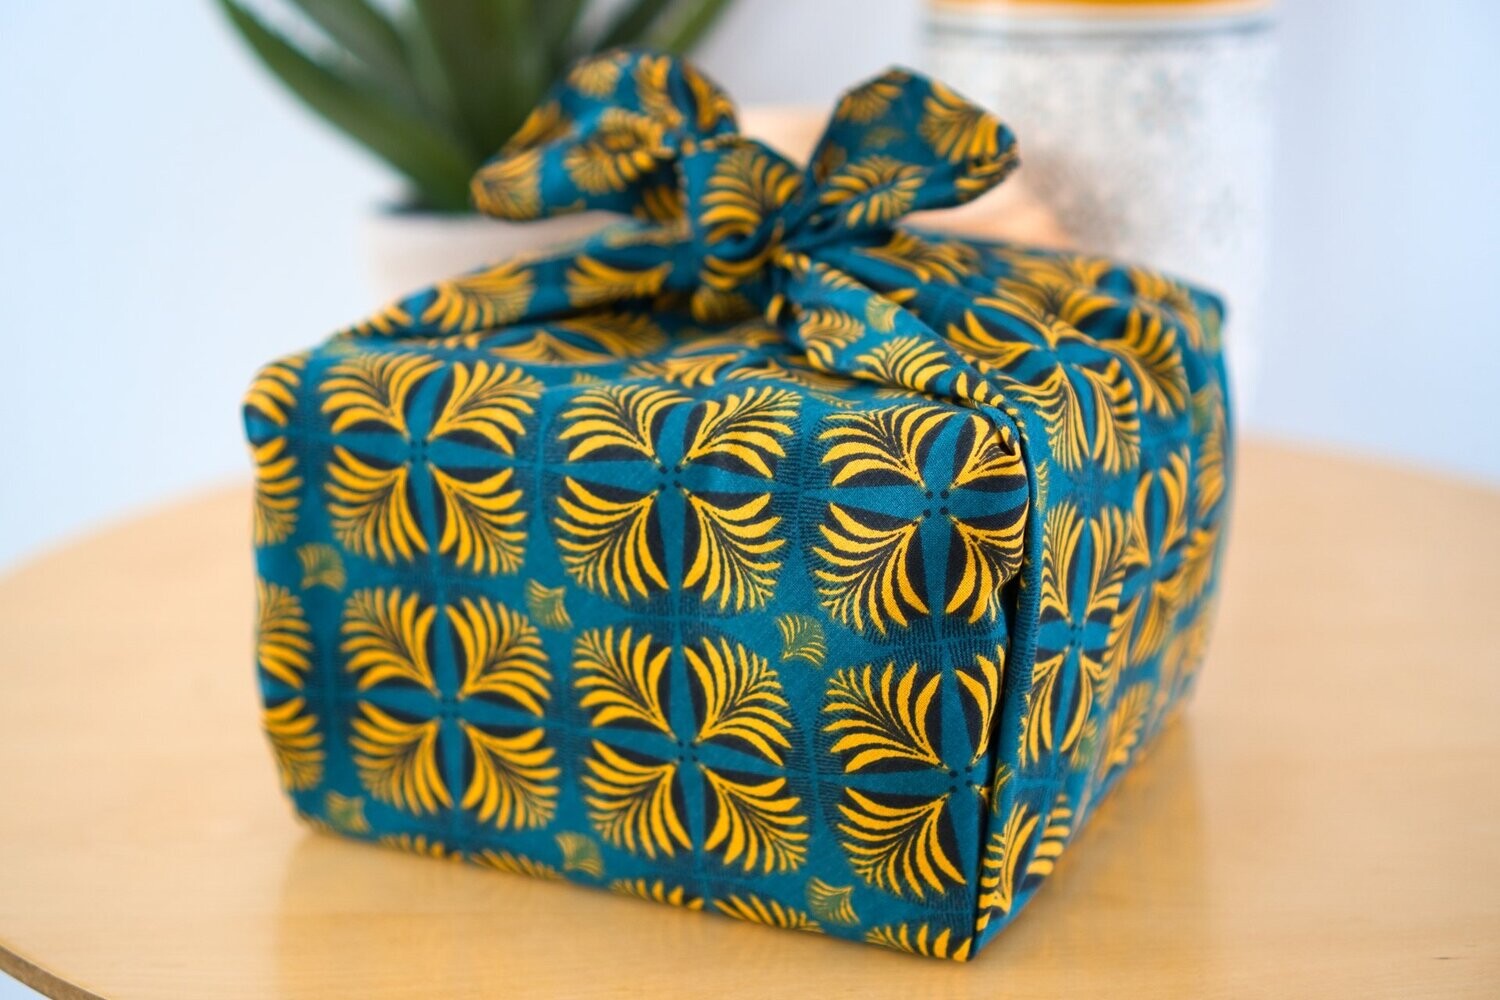 Emballage Cadeau Portable Tissu Argent/Or Couleurs Feuille Tissu